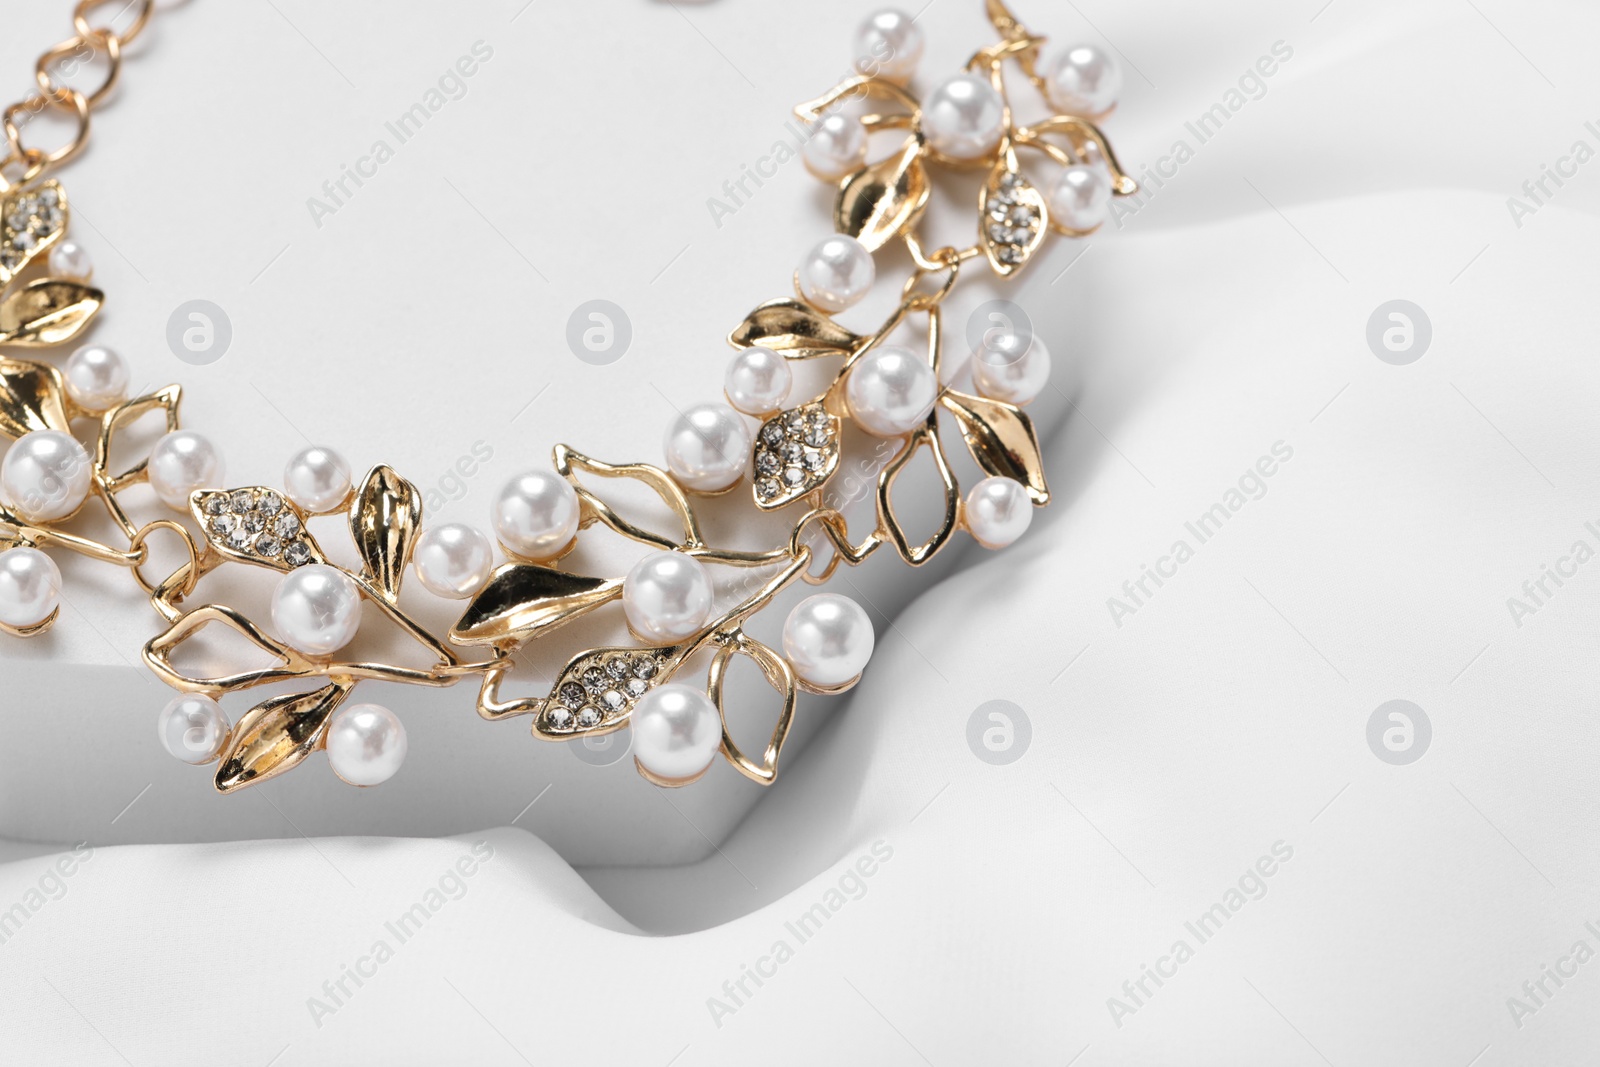 Photo of Beautiful necklace on white background, closeup. Luxury jewelry